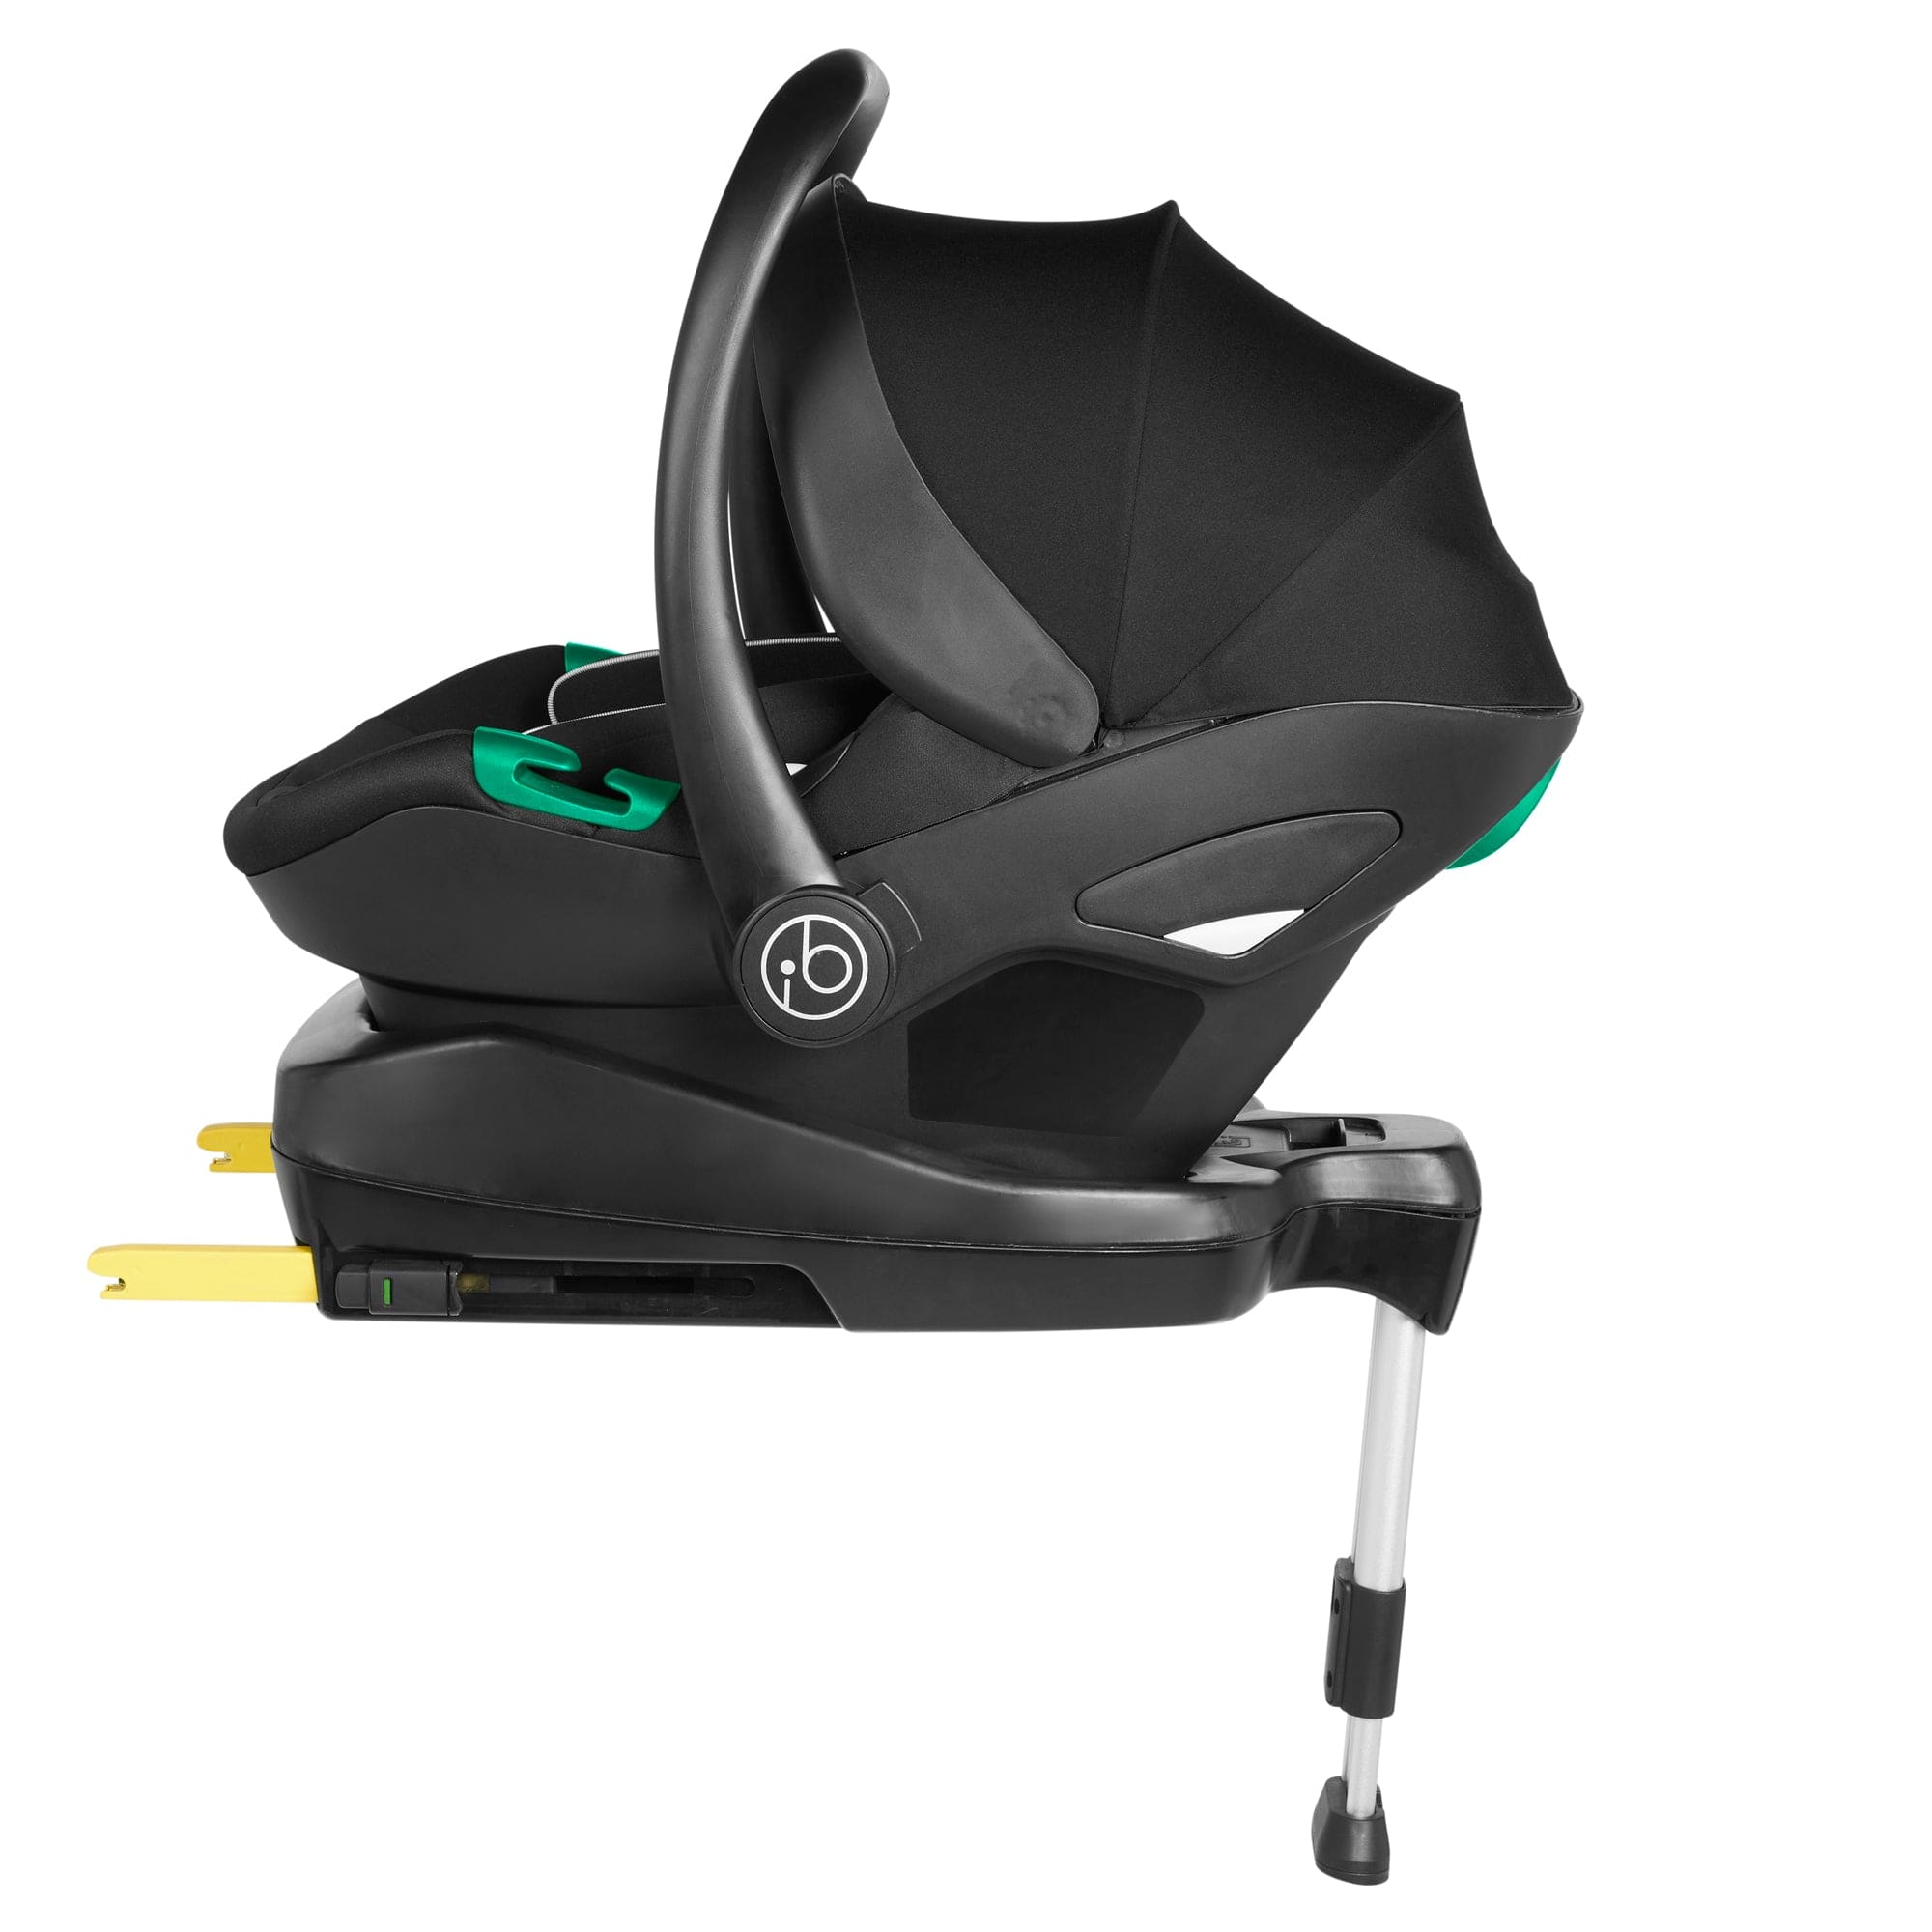 Babys-Mart travel systems ALTIMA AIO Bundle with i-Size Isofix Car Seat & Base (BLACK) 10-012-300-001